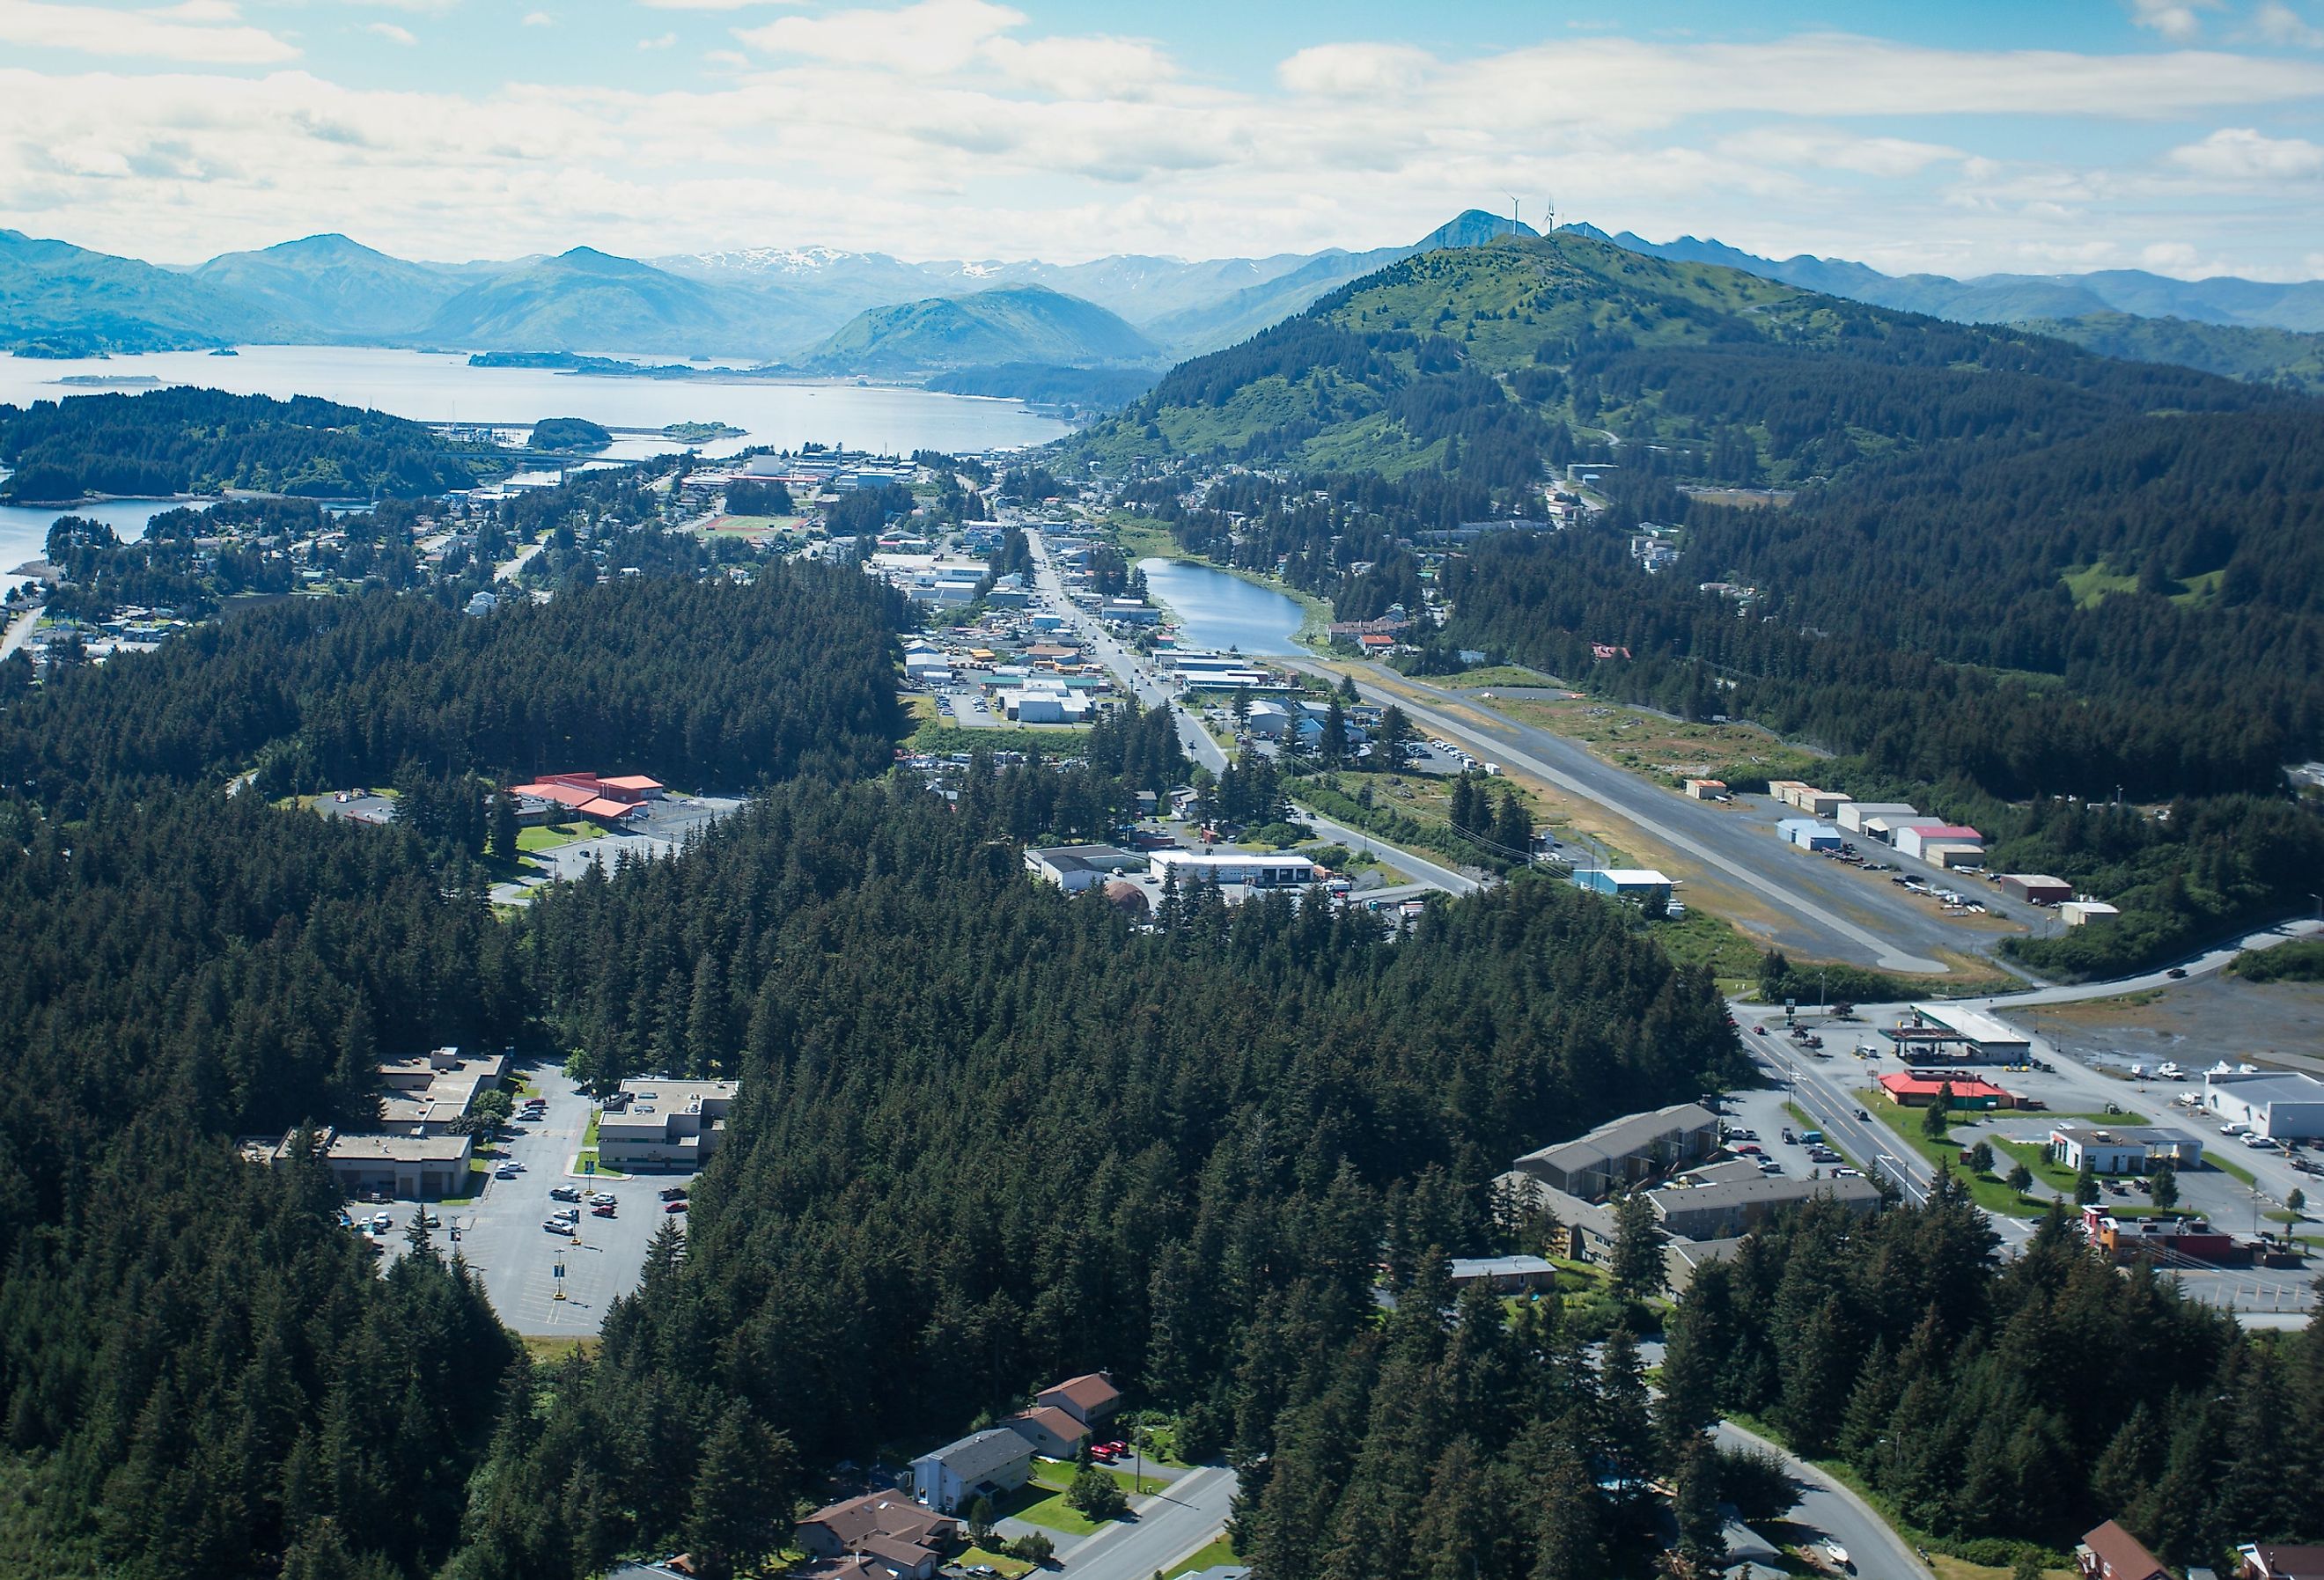 Aerial view of the town of Kodiak, Alaska.